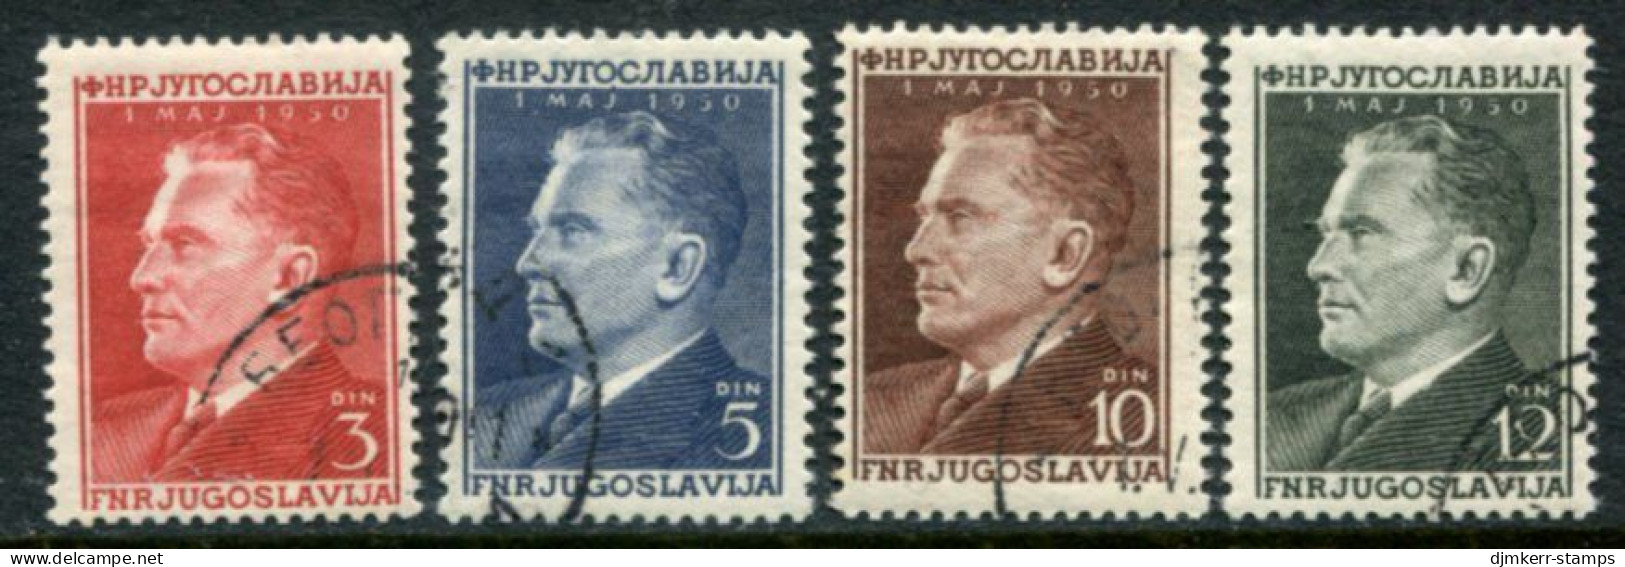 YUGOSLAVIA 1950 Labour Day - Tito Used.  Michel 605-08 - Used Stamps